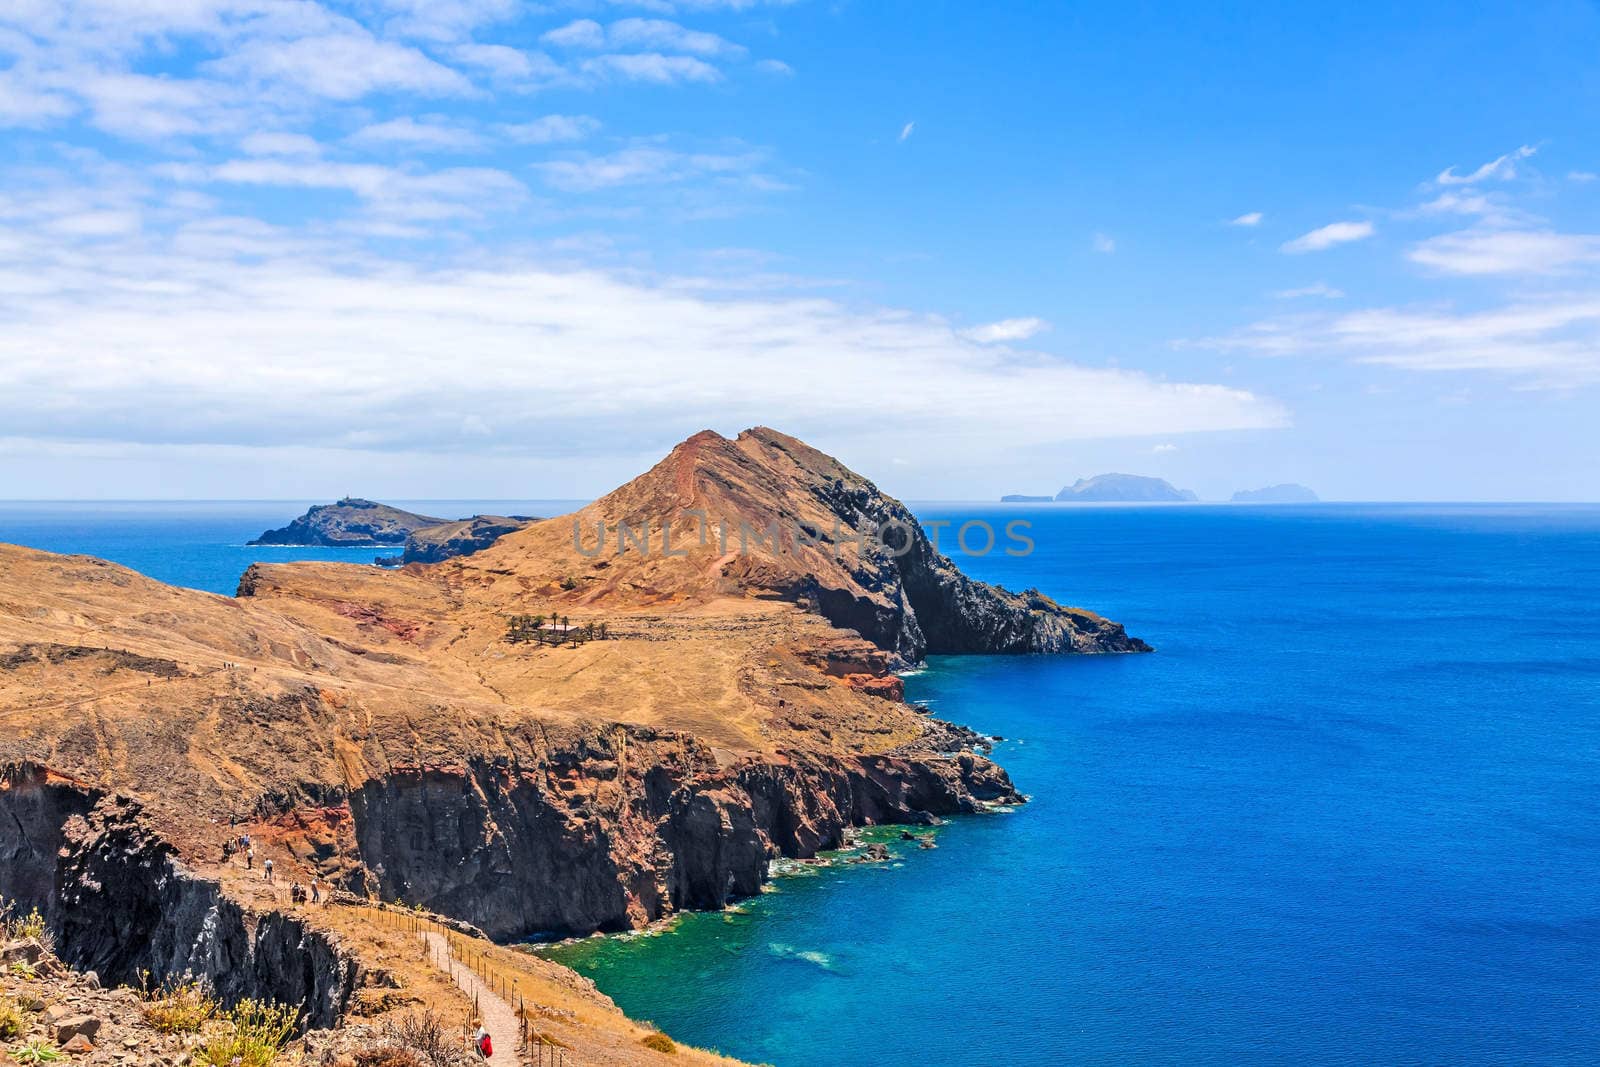 Madeira - mountainous natural landscape - peninsula Ponta de Sao Lourenco - most easterly point of the island